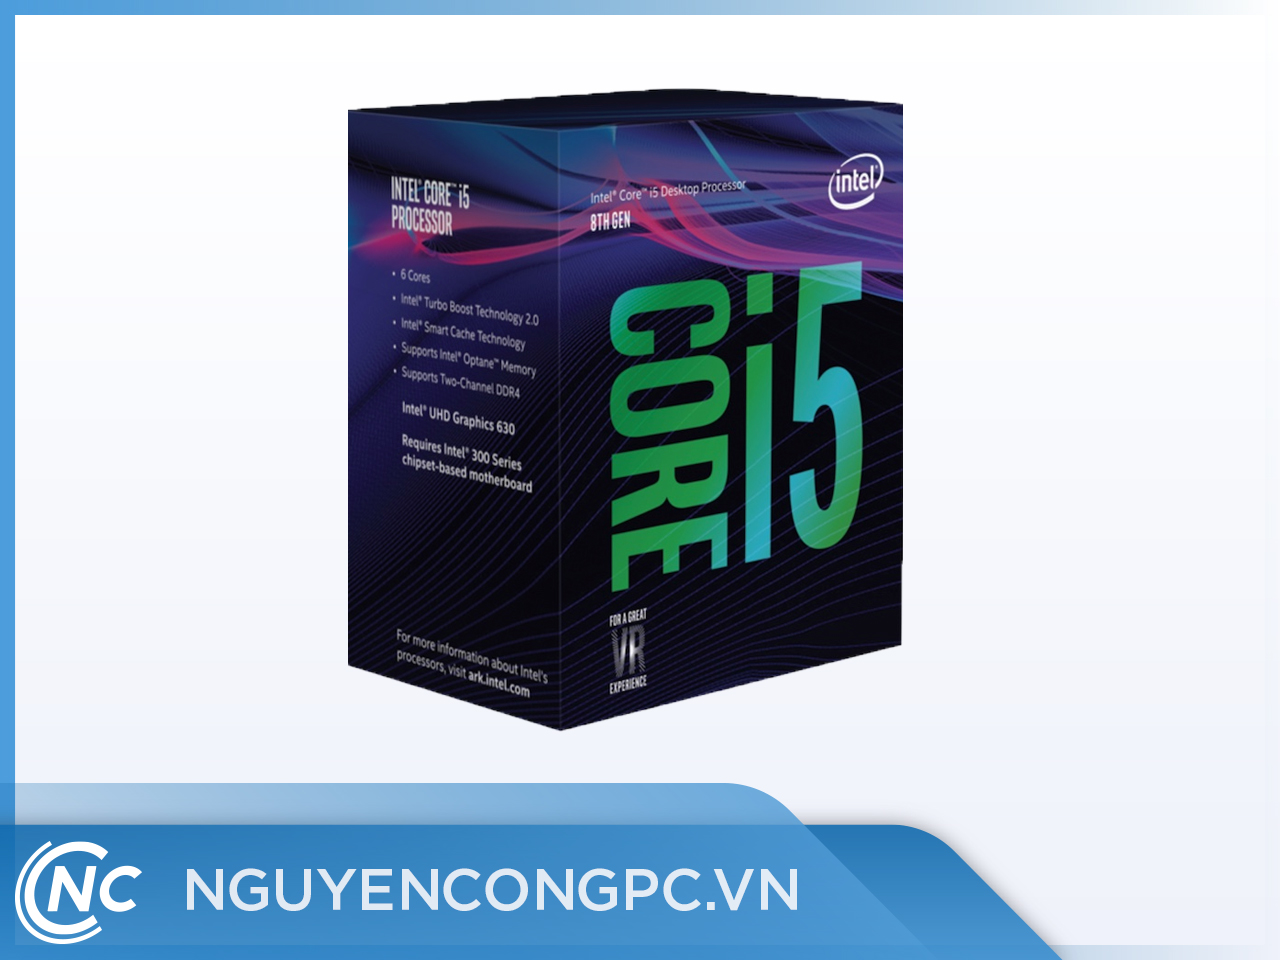 Intel core i5 10500. Intel Core i5-8400. Intel Core i5-8600. Intel Core i5-8400 lga1151 v2, 6 x 2800 МГЦ. 8600k.